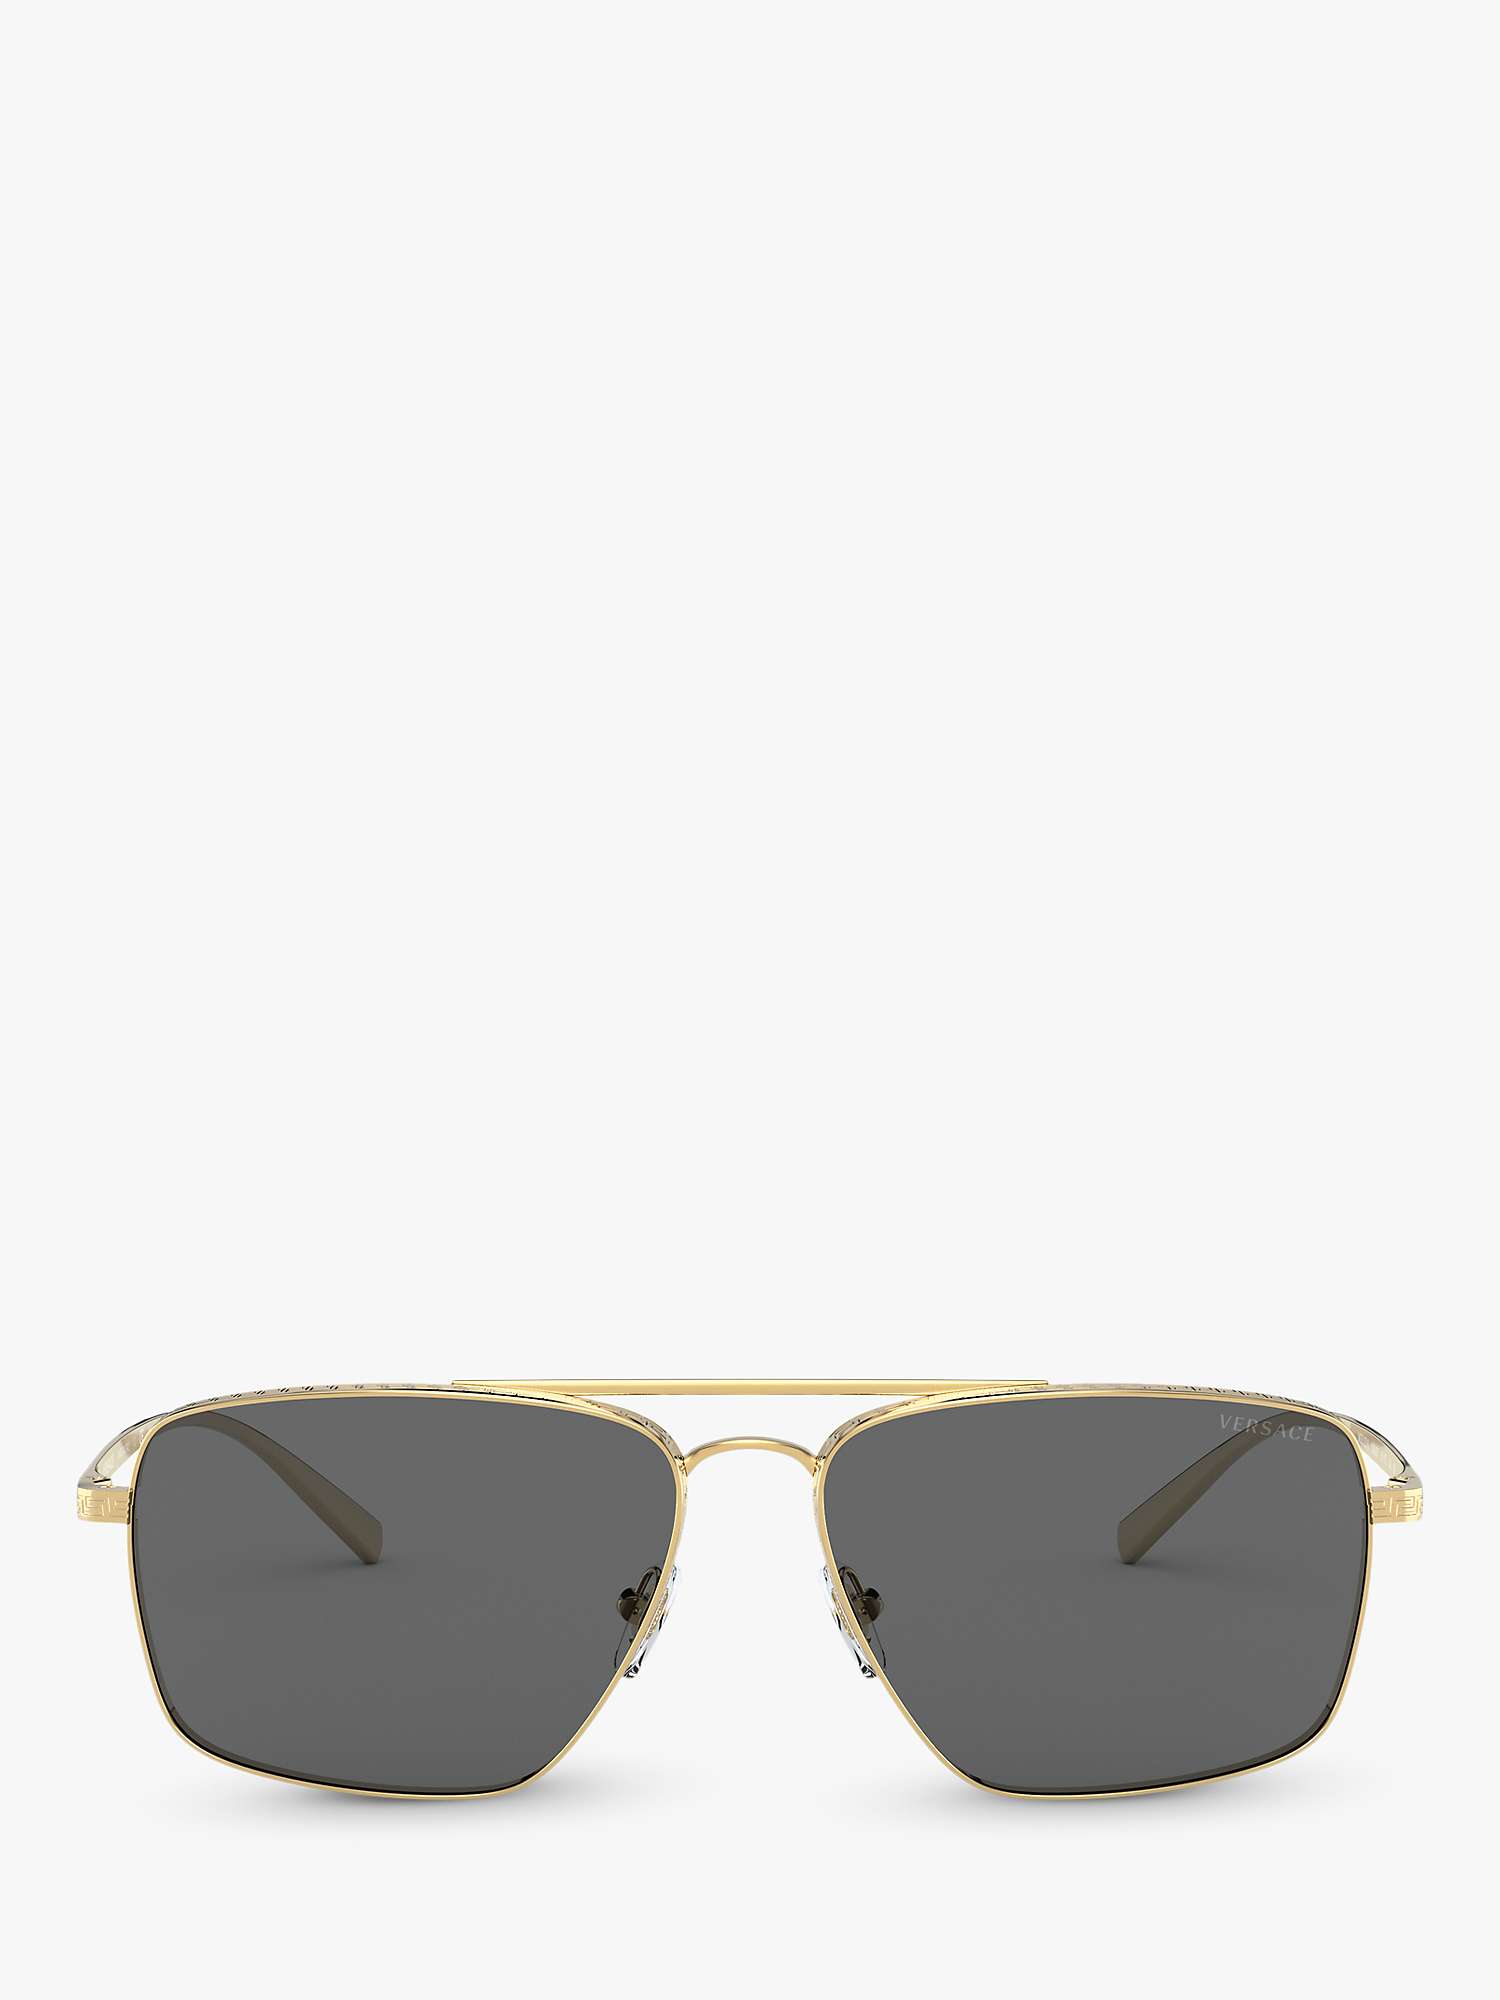 Buy Versace VE2216 Men's Square Sunglasses Online at johnlewis.com